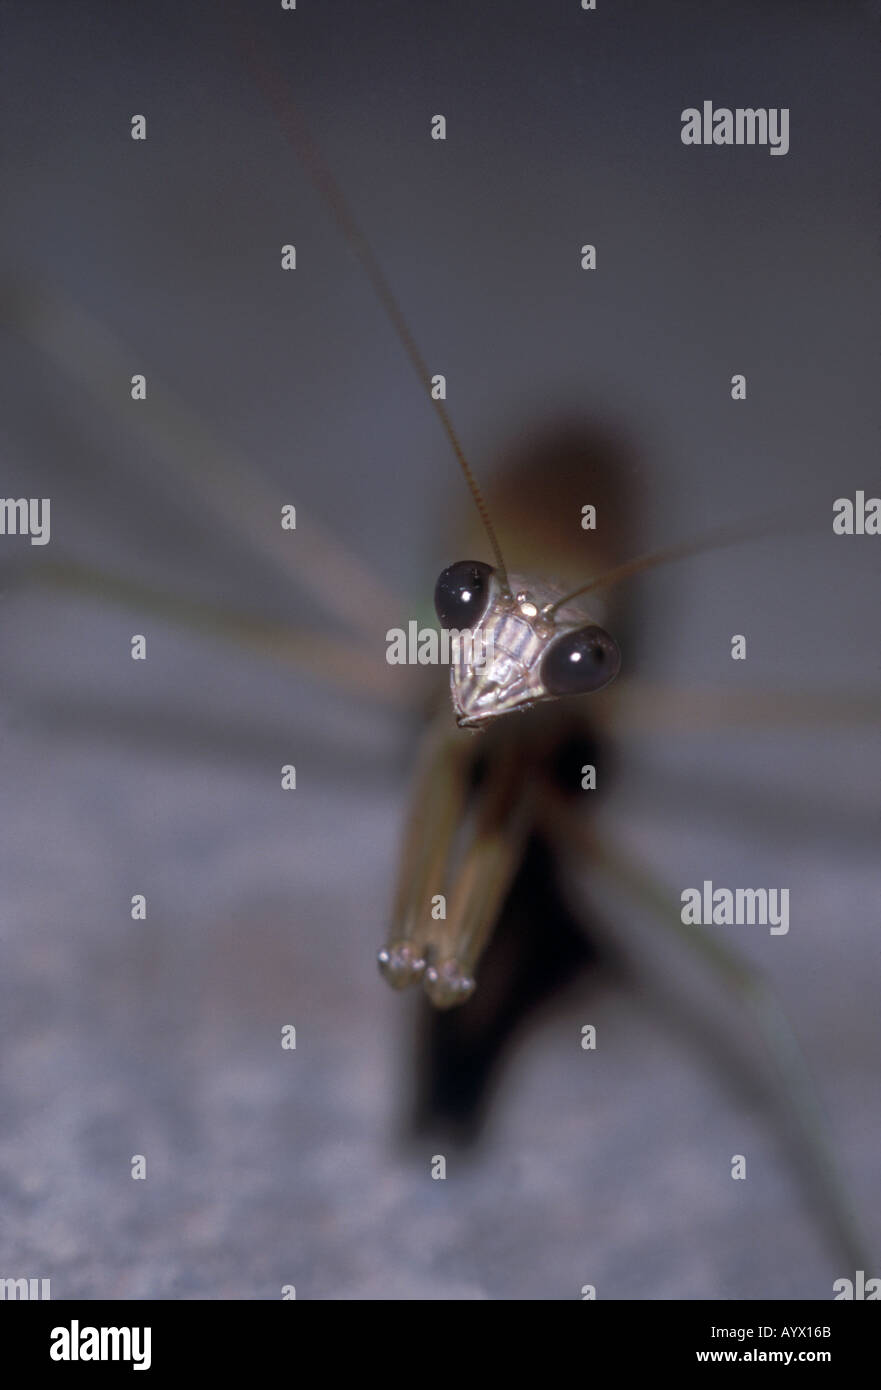 Preying mantis portrait. Selective focus on face. Stock Photo